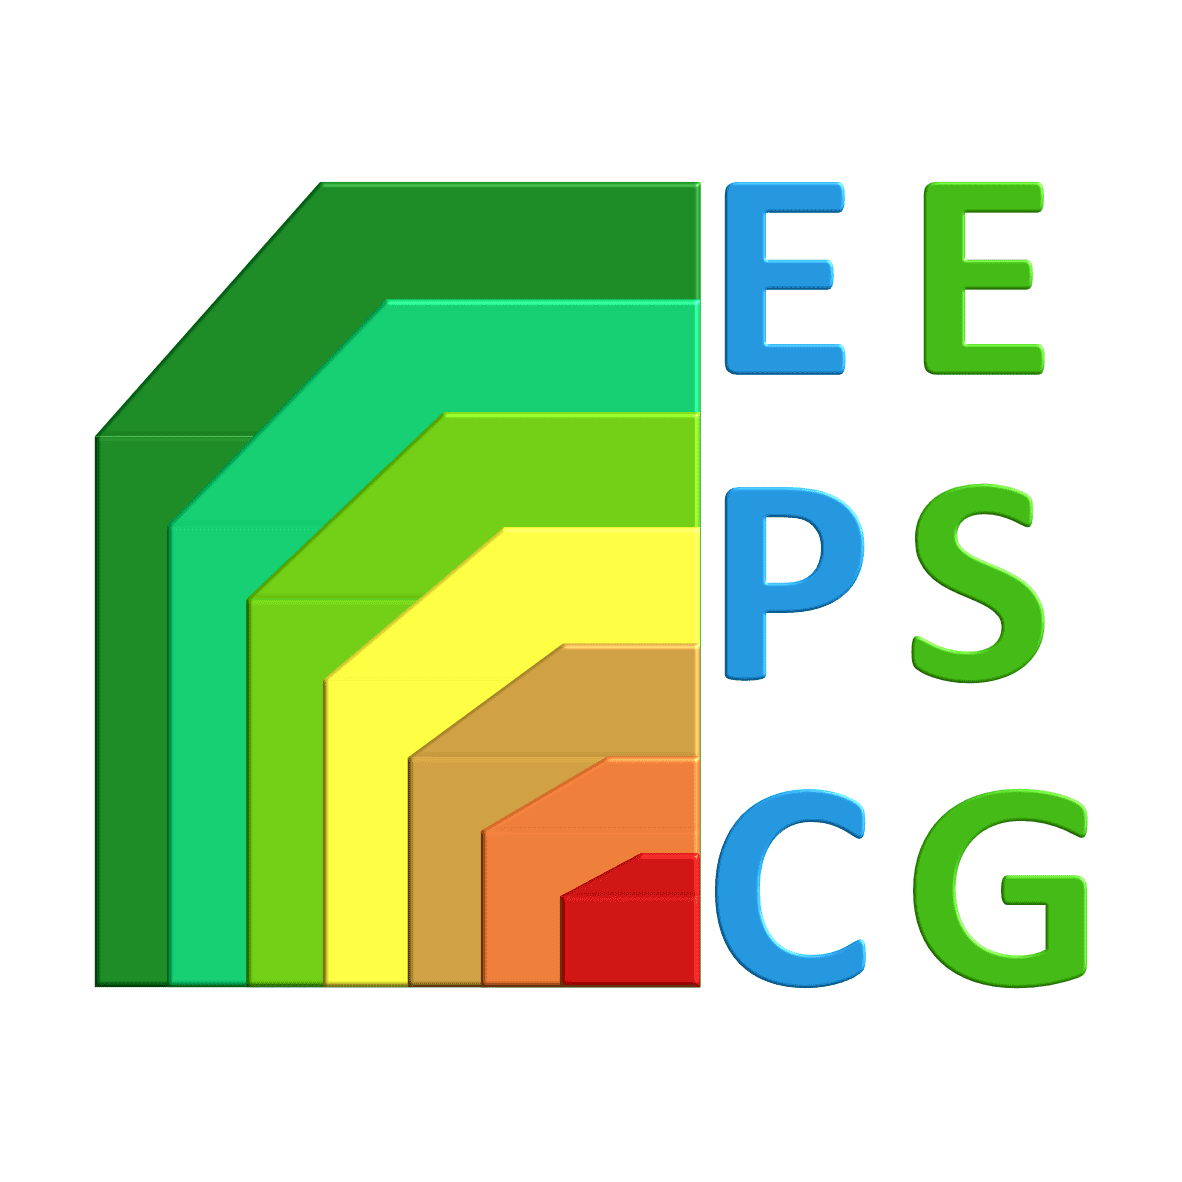 EPC and ESG